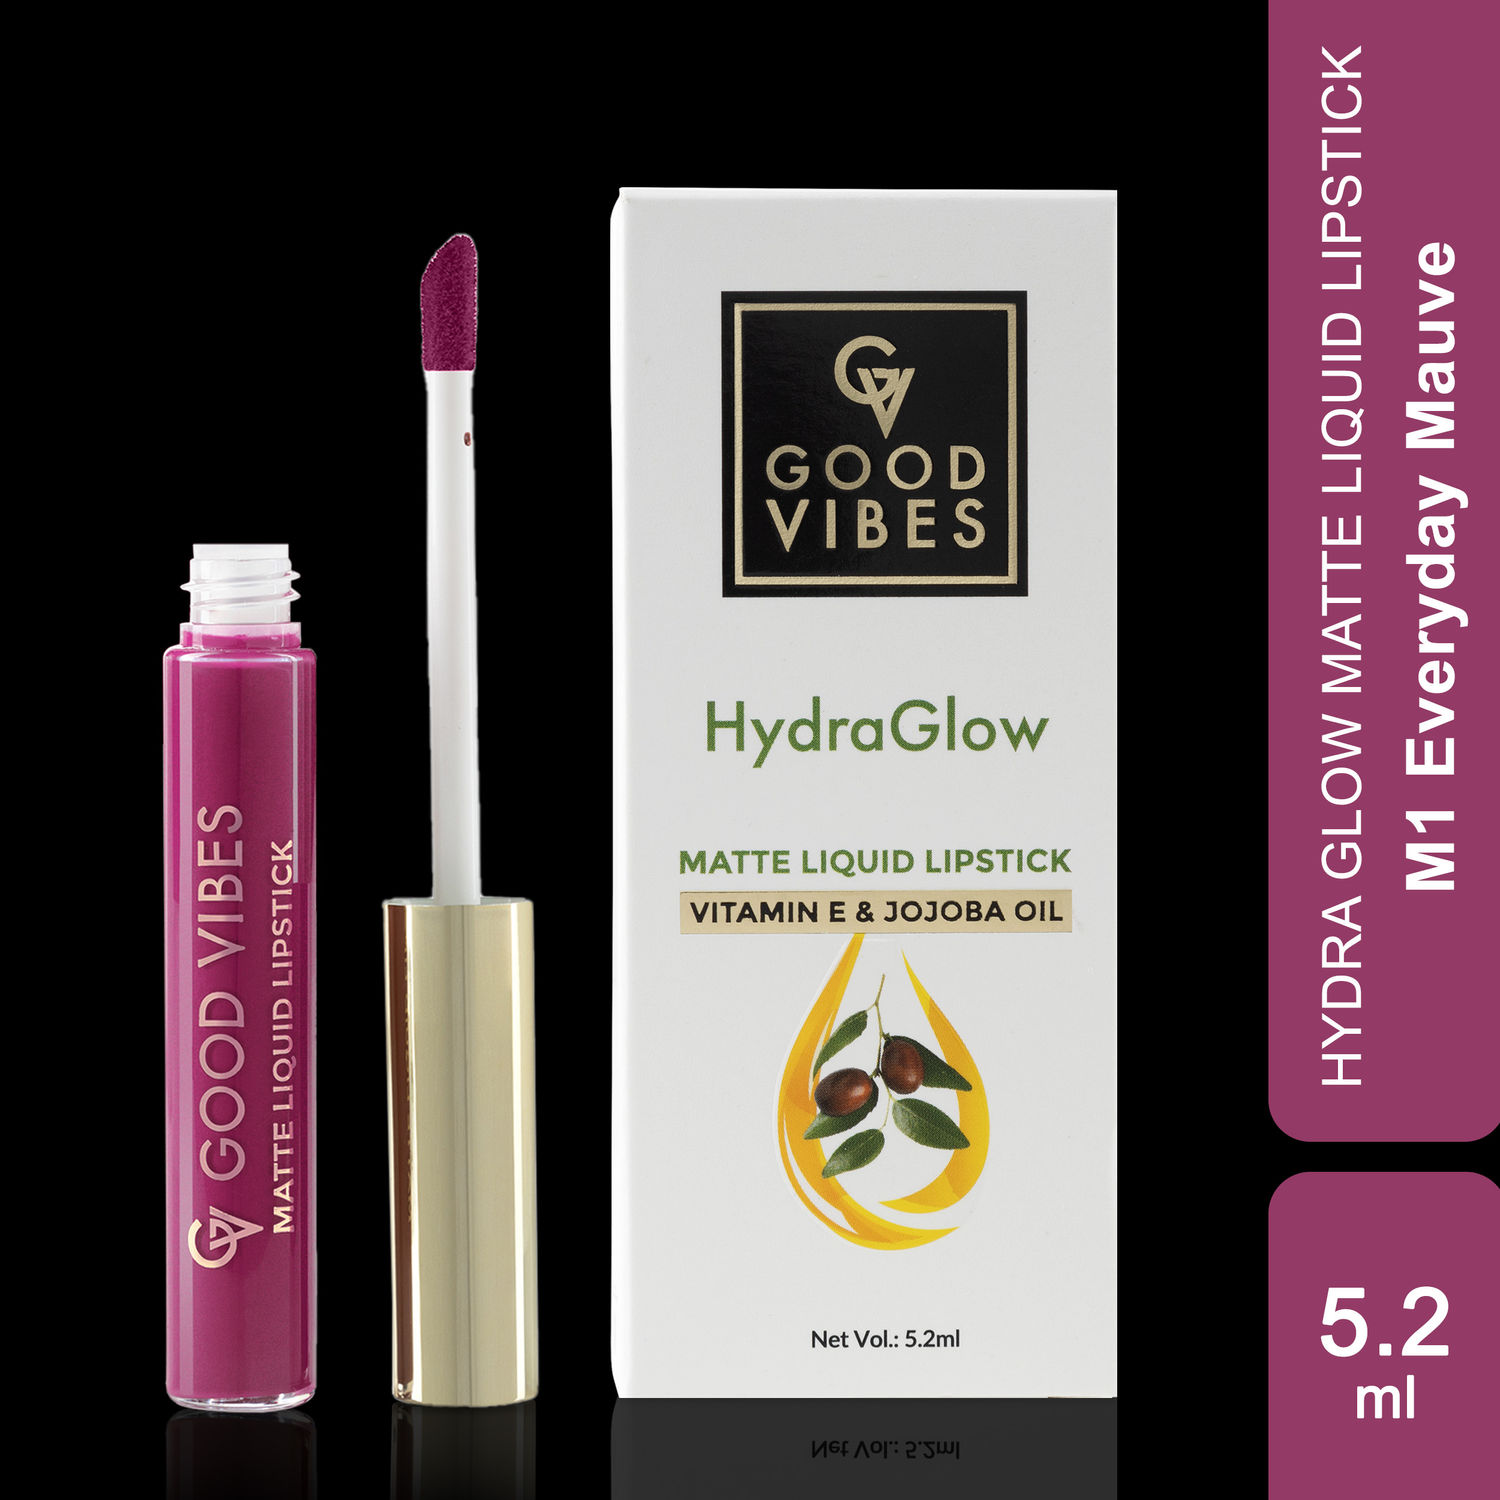 Good Vibes HydraGlow Matte Liquid Lipstick| Jojoba & Vitamin E| Everyday Mauve (M1) - (5.2ml)